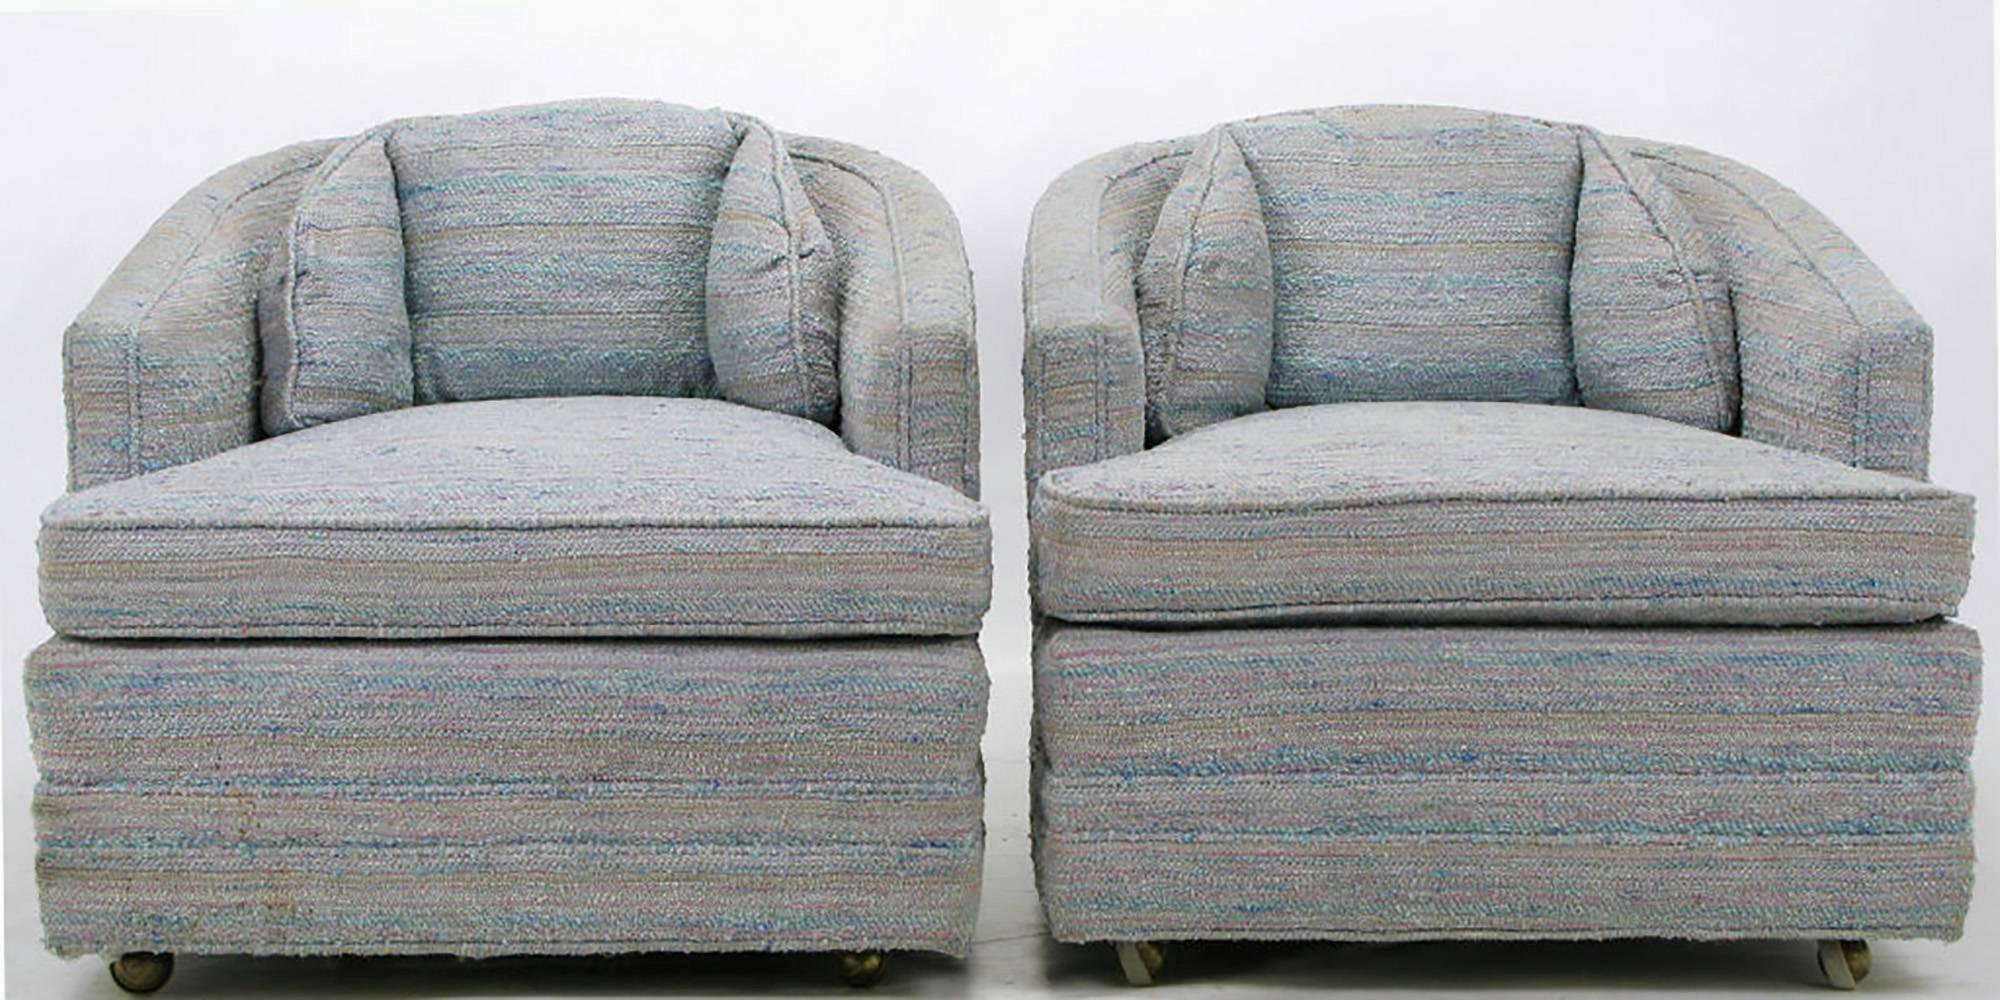 Pair of Knapp & Tubbs Barrel Chairs in Original Blue Upholstery 1